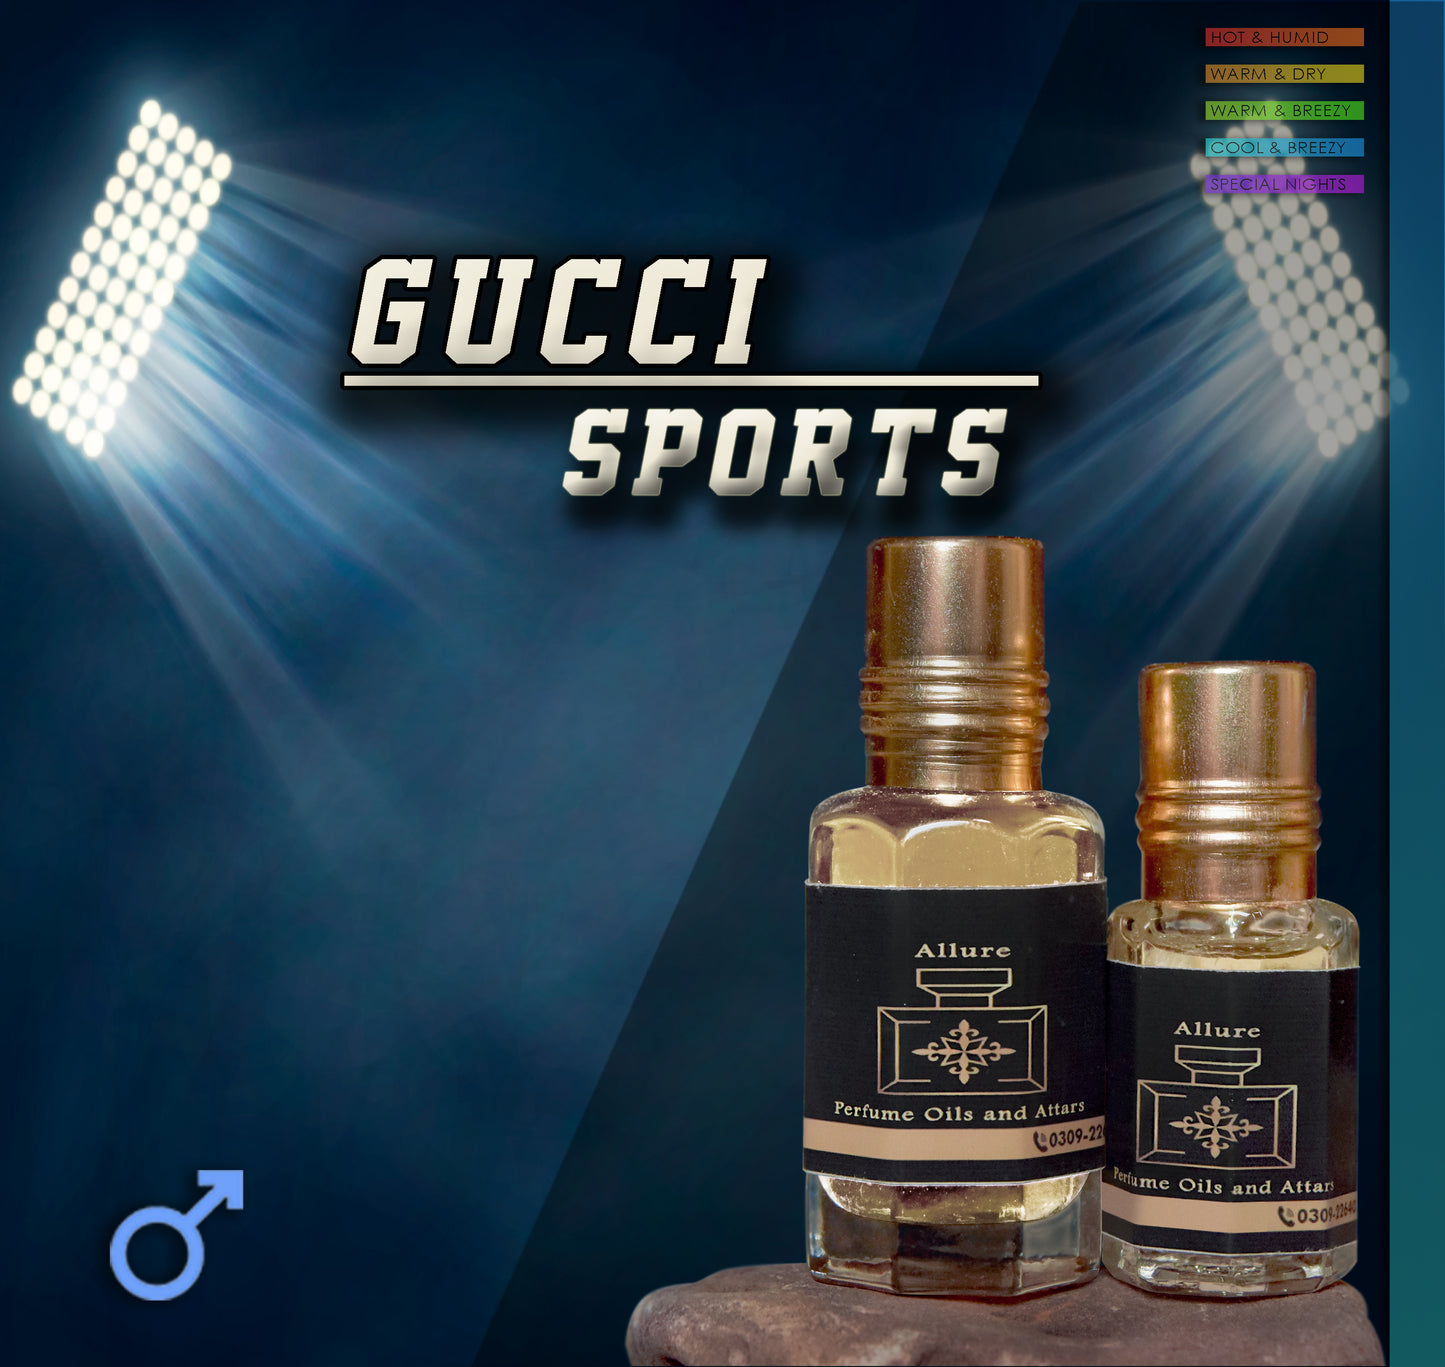 Gucci Sports Attar in high quality (Perfume Oil)